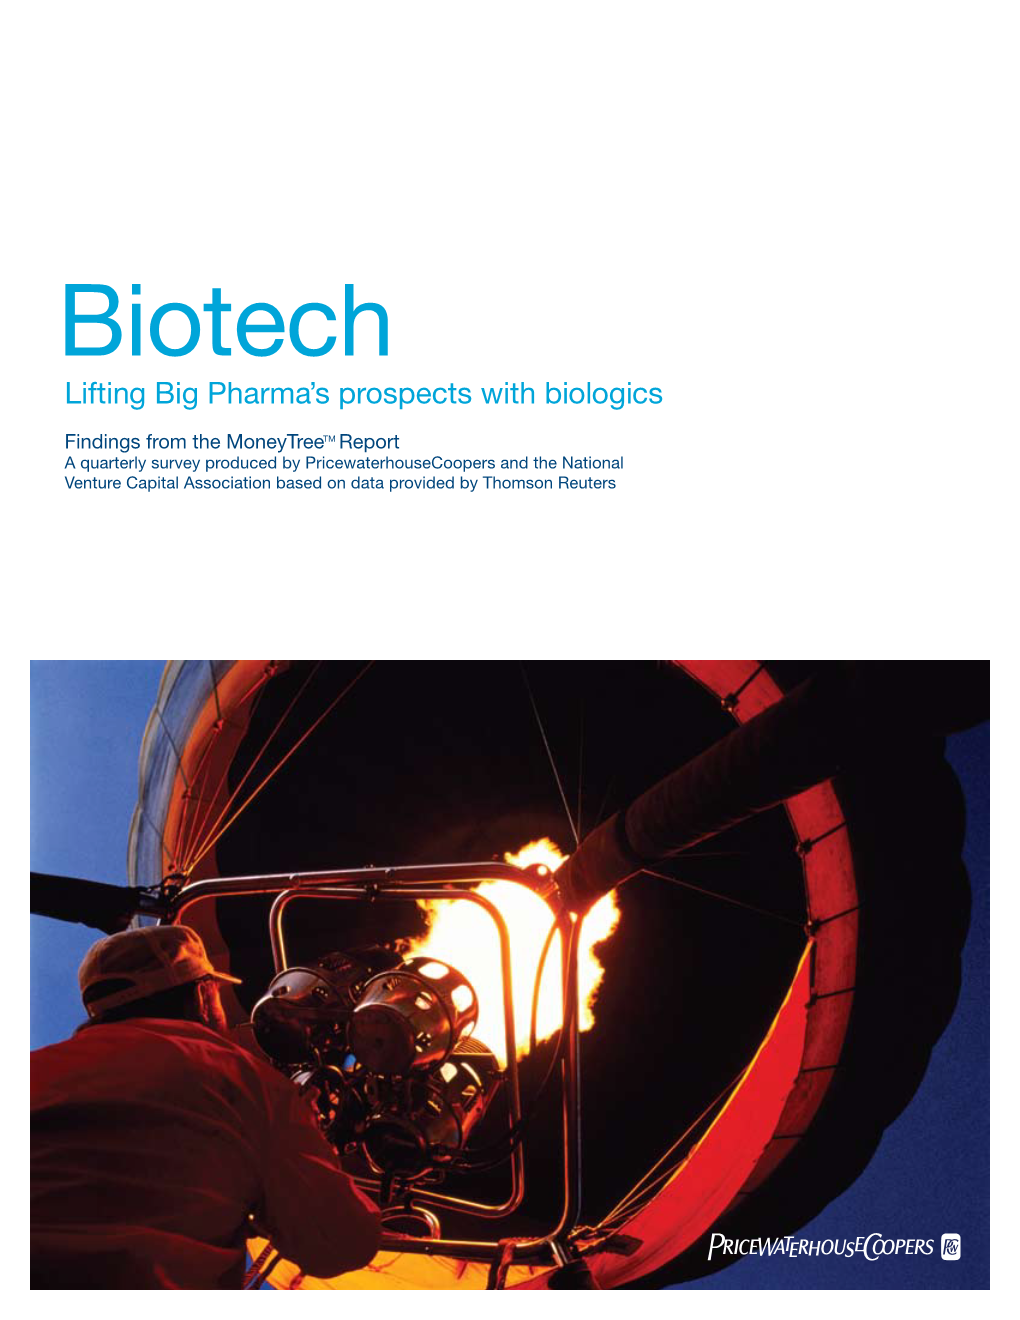 Biotech: Lifting Big Pharma's Prospects with Biologics